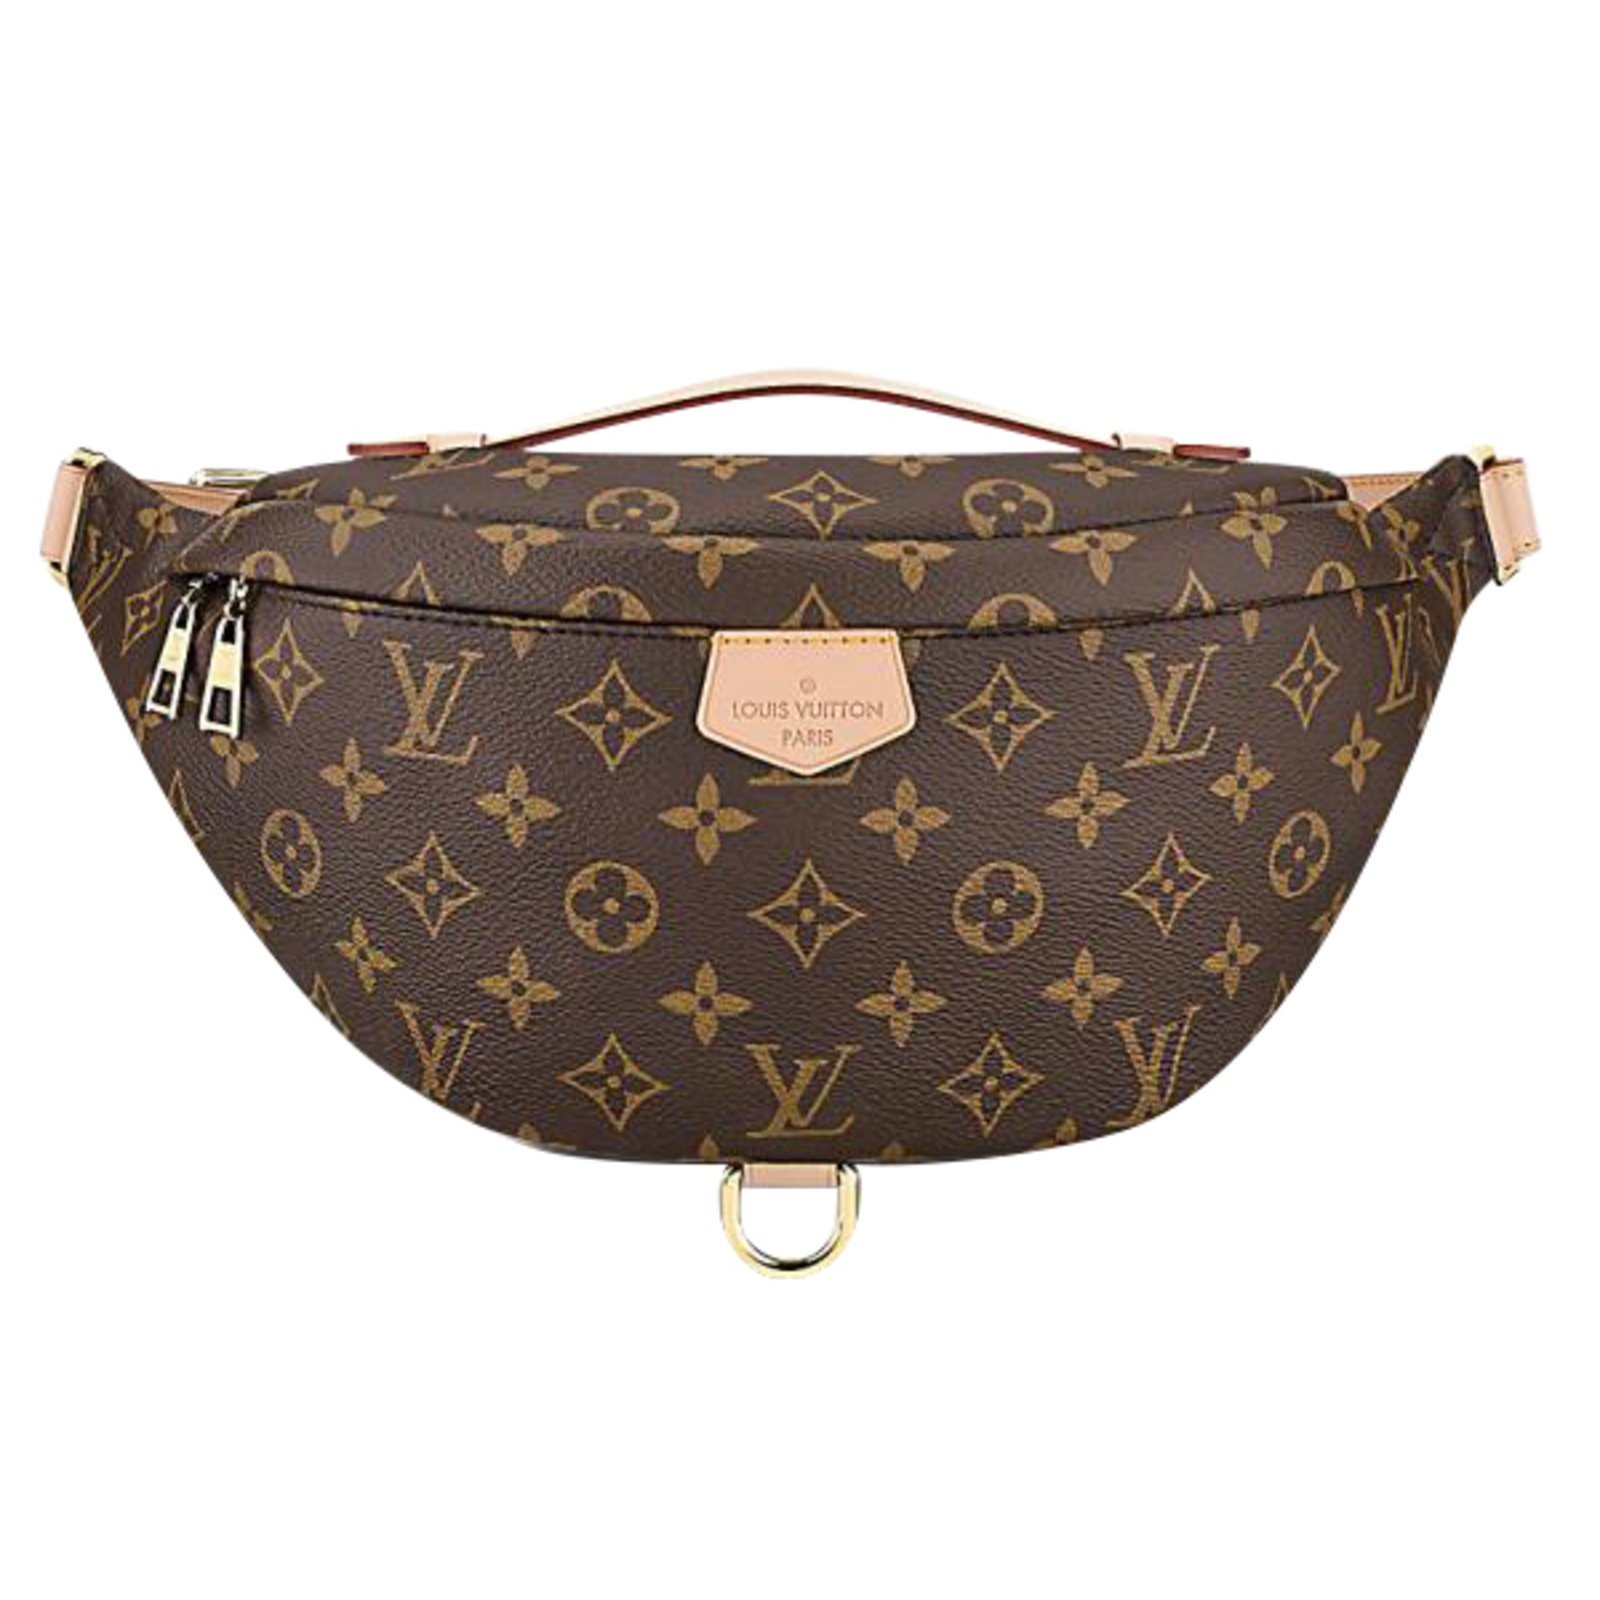 Bum bag / sac ceinture leather bag Louis Vuitton Brown in Leather - 37807889